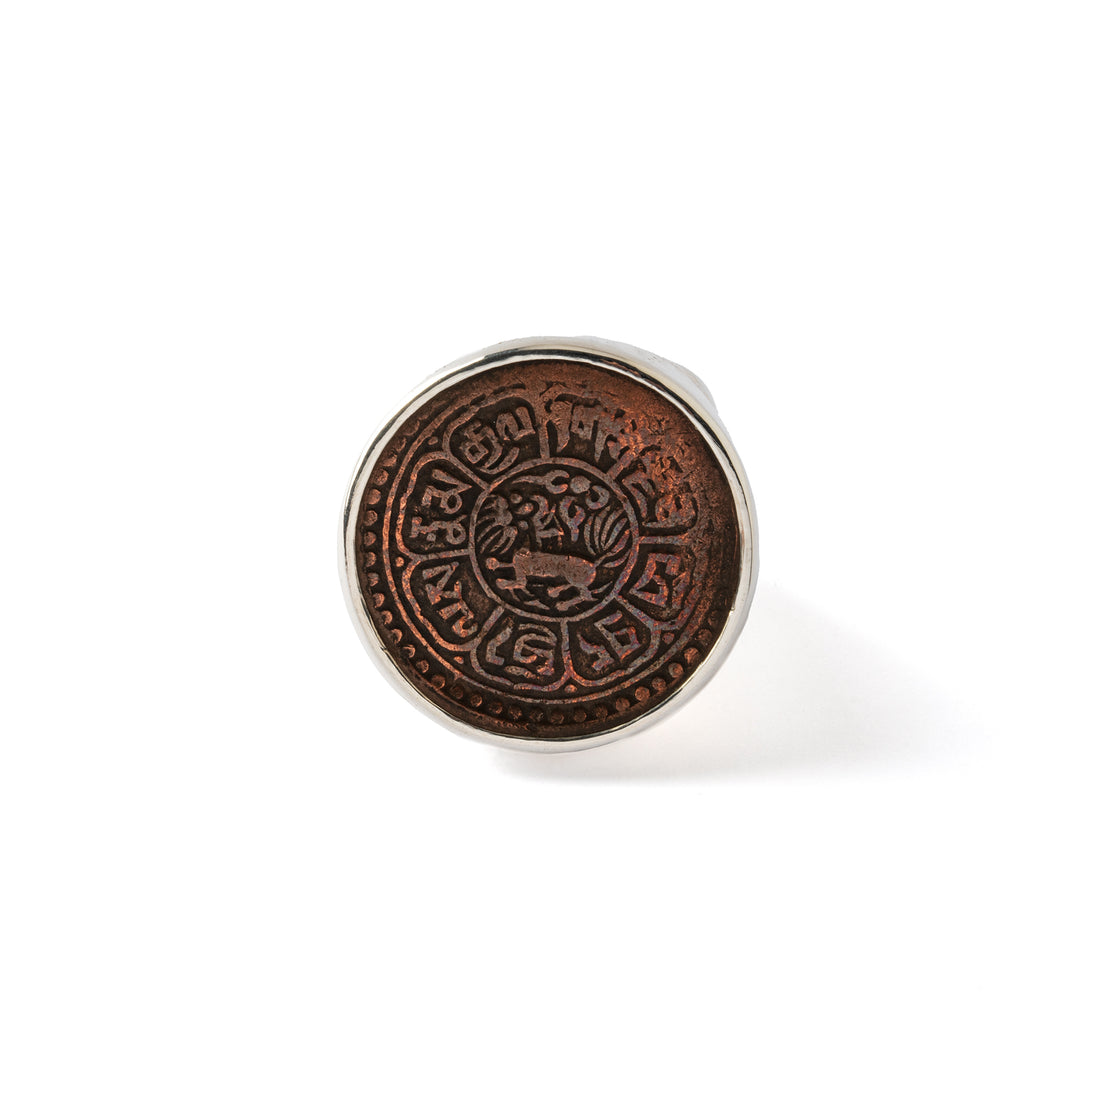 Tibetan Coin set in Silver Ring